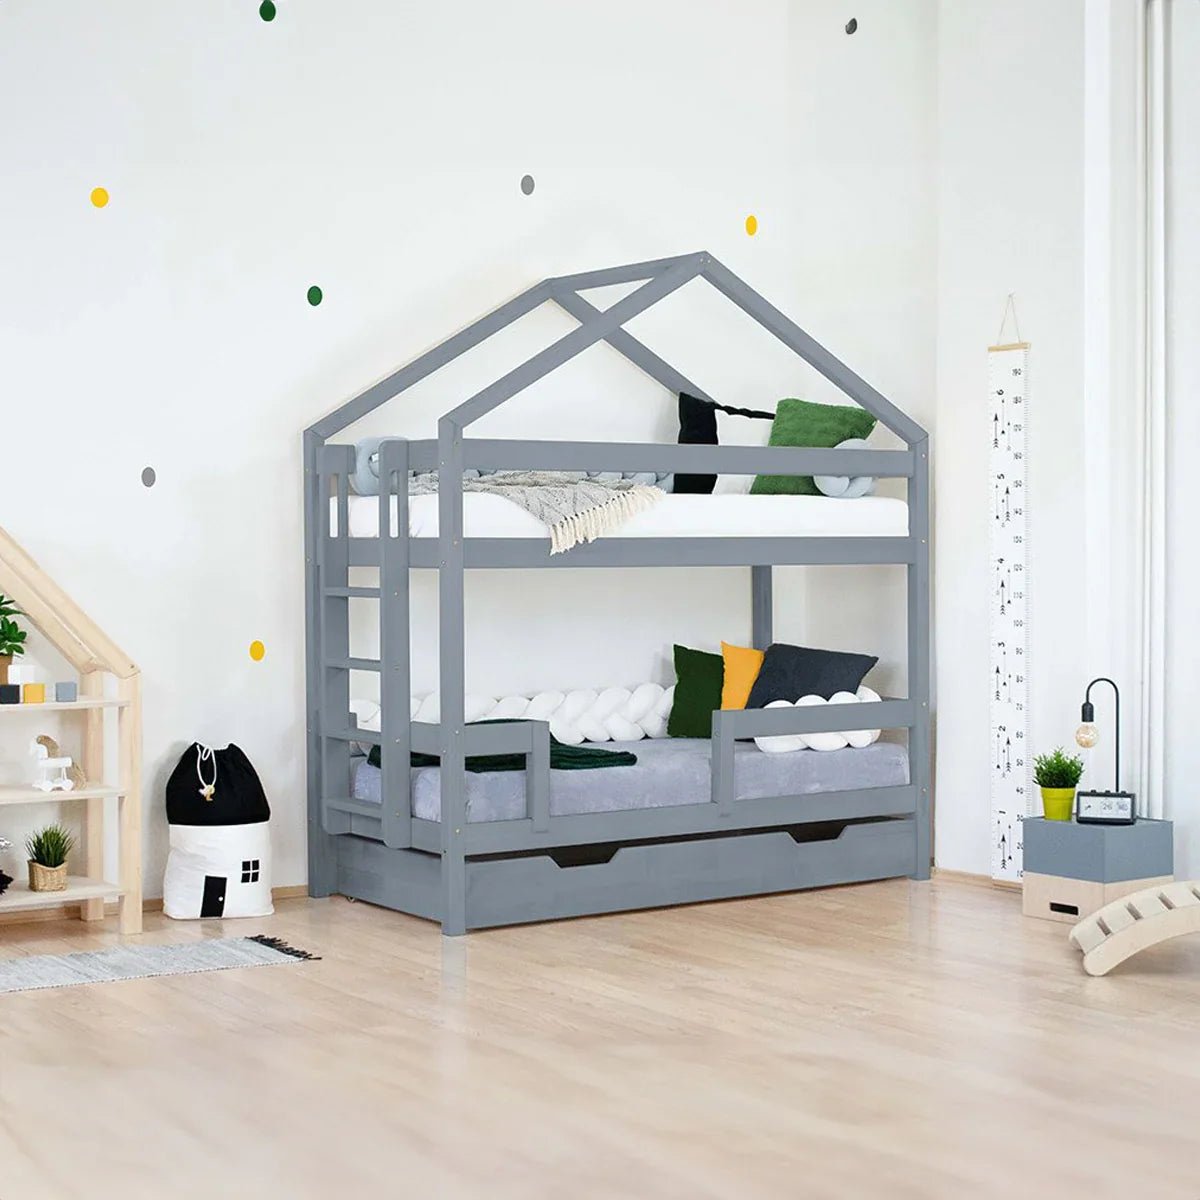 Wooden Children's House Bunk Bed KILI - Grey - MOBILIA VITA